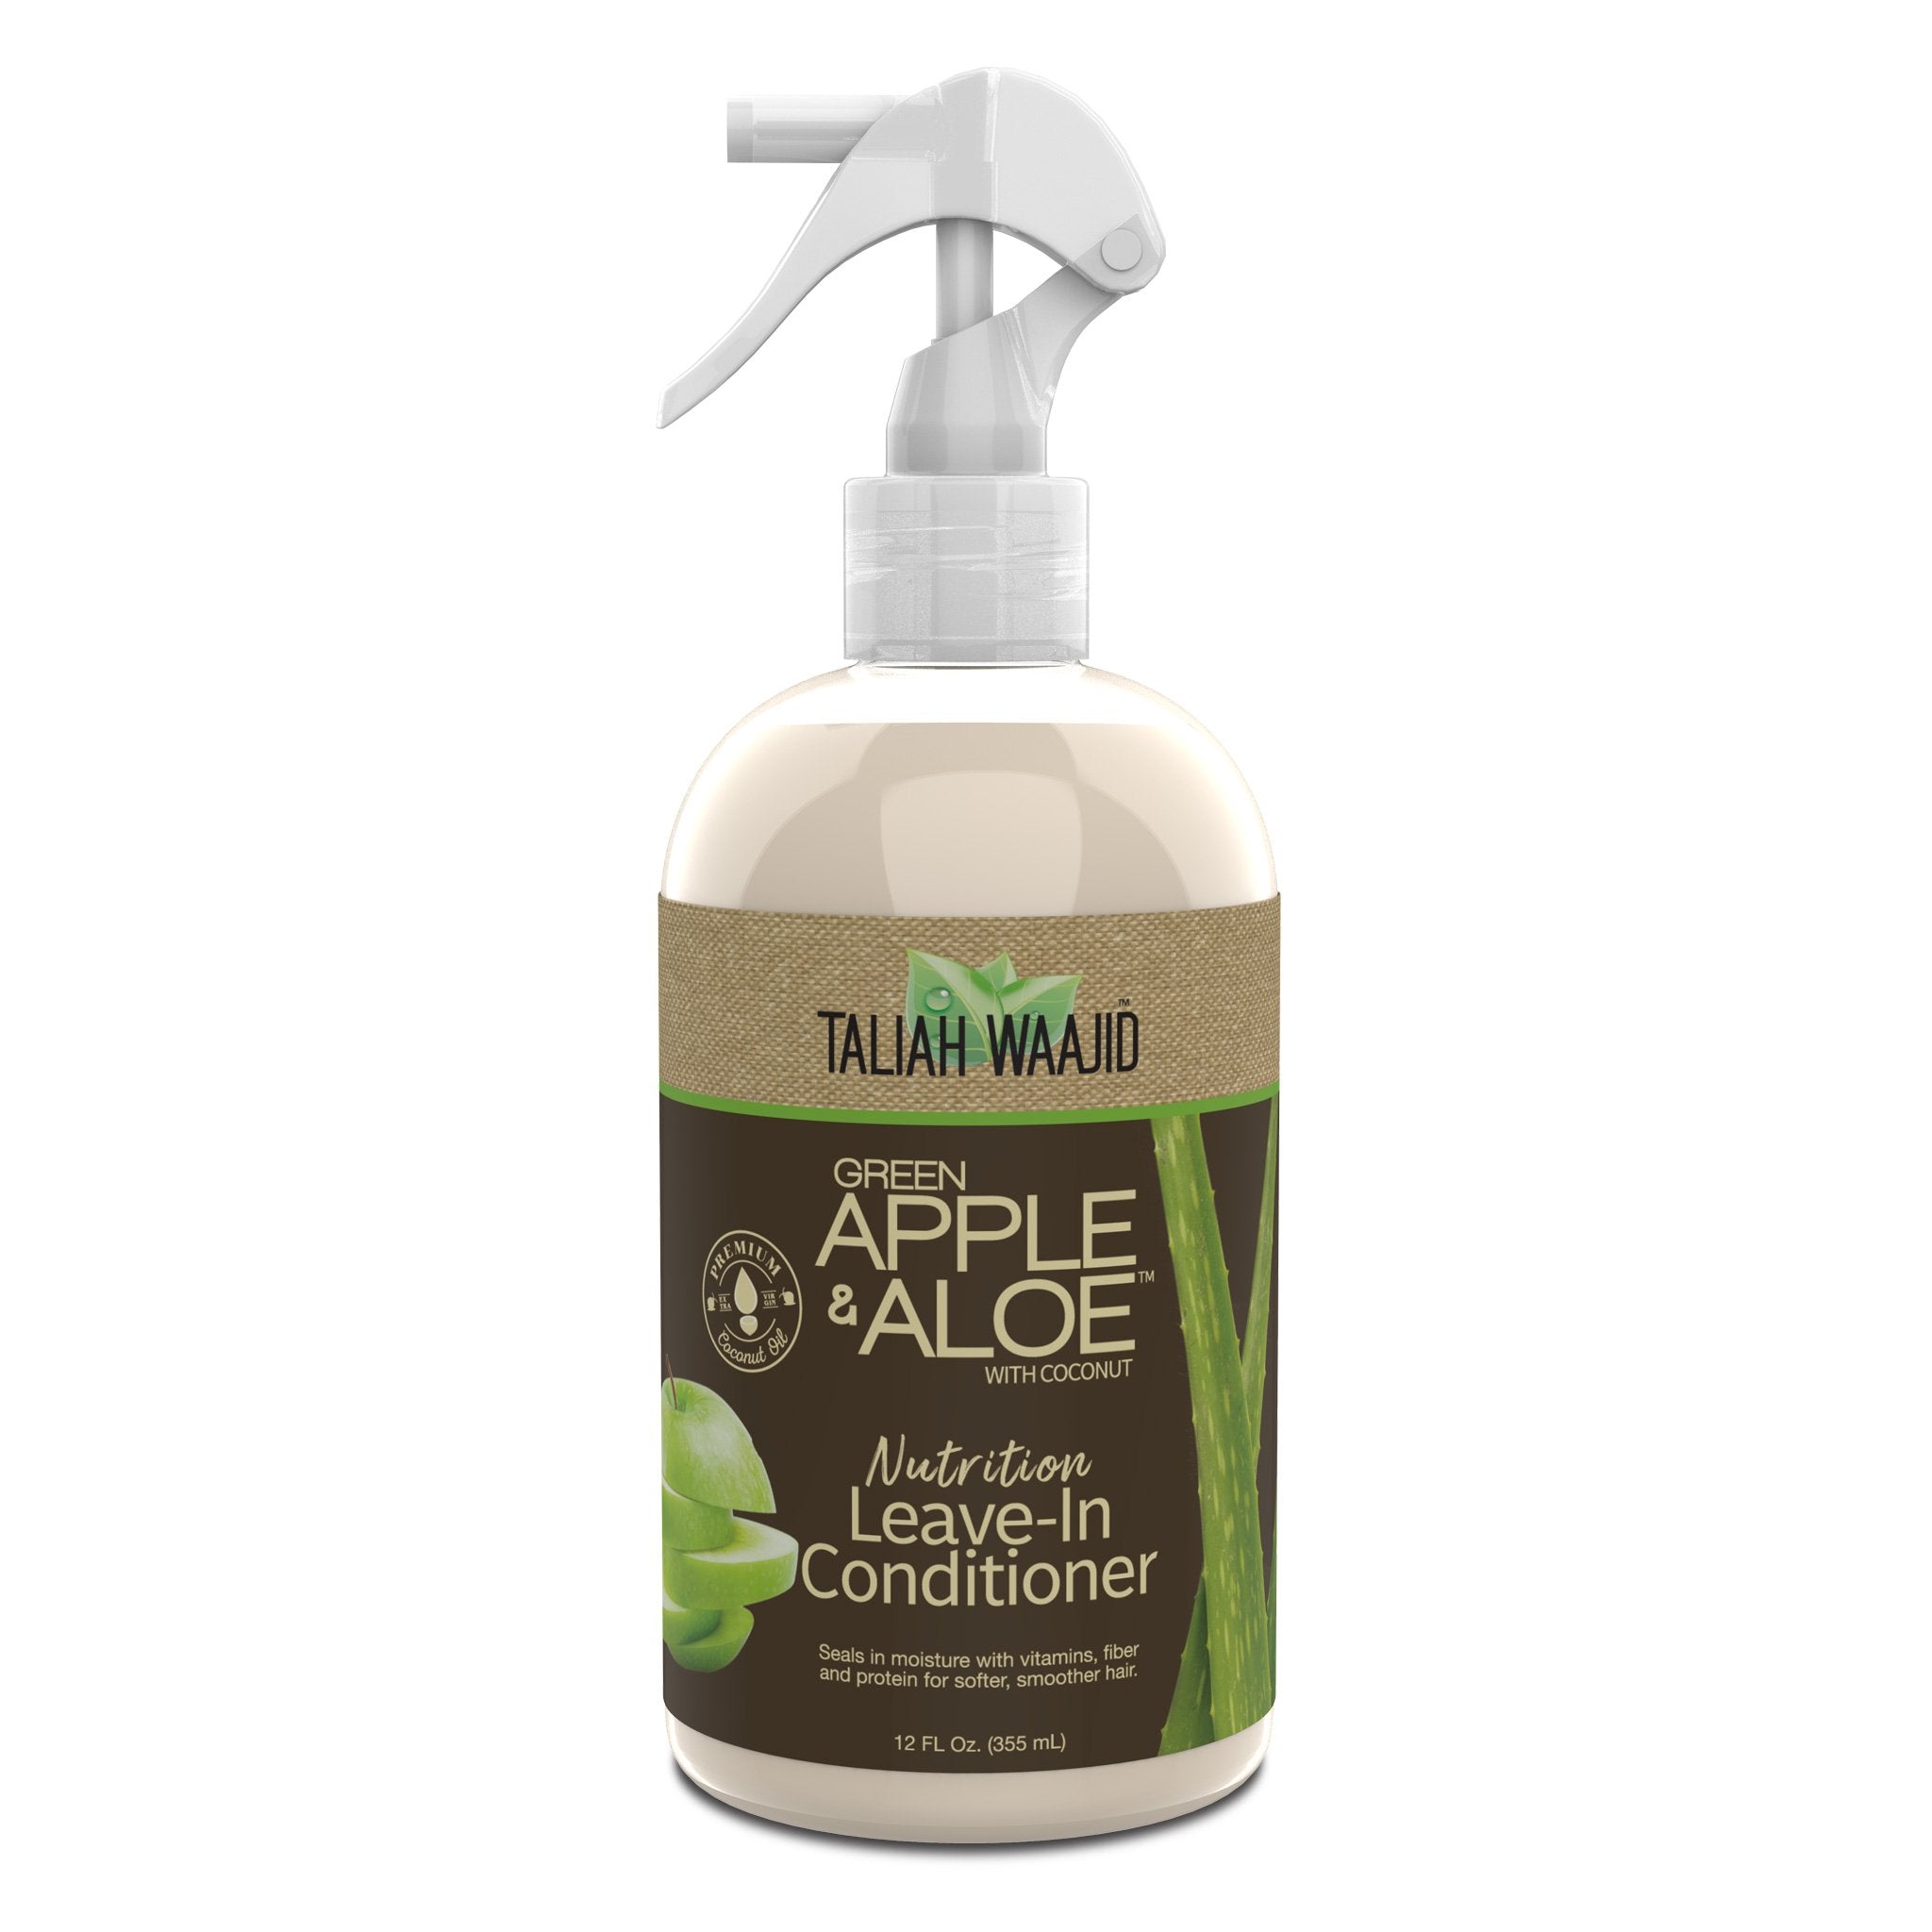 Taliah Waajid- Green Apple & Aloe Nutrition Leave-In Conditioner